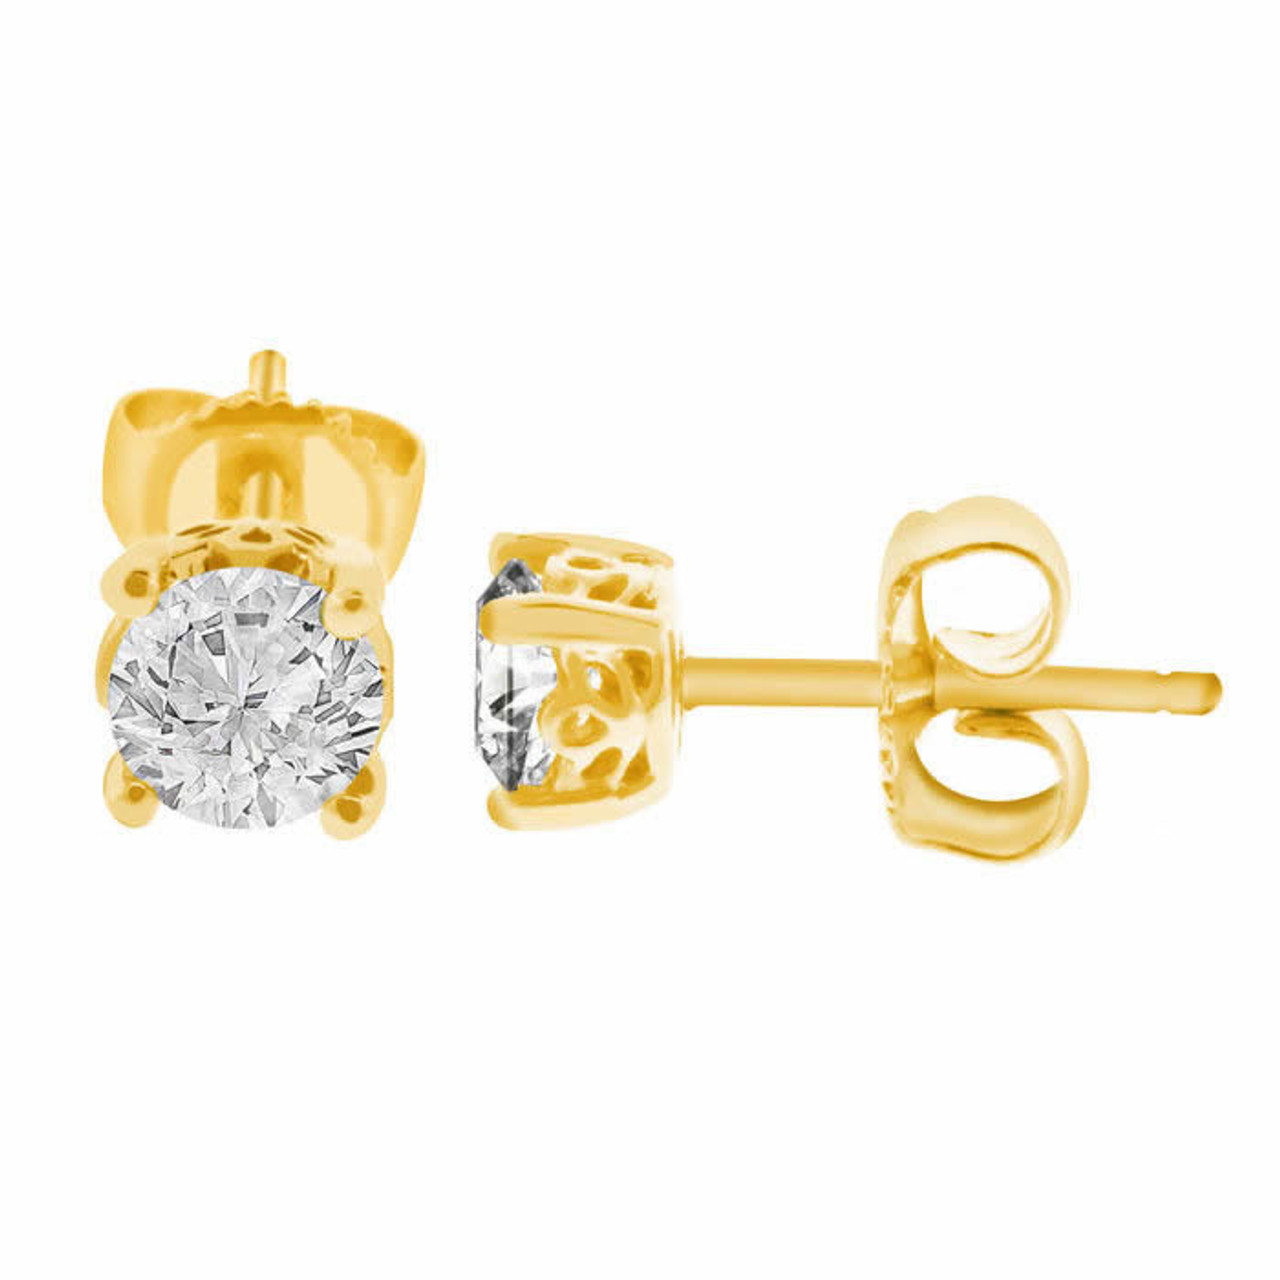 Diamond Stud Earrings Yellow Gold, Diamond Earrings, 0.74 Carat Handmade Gallery Designs Unique